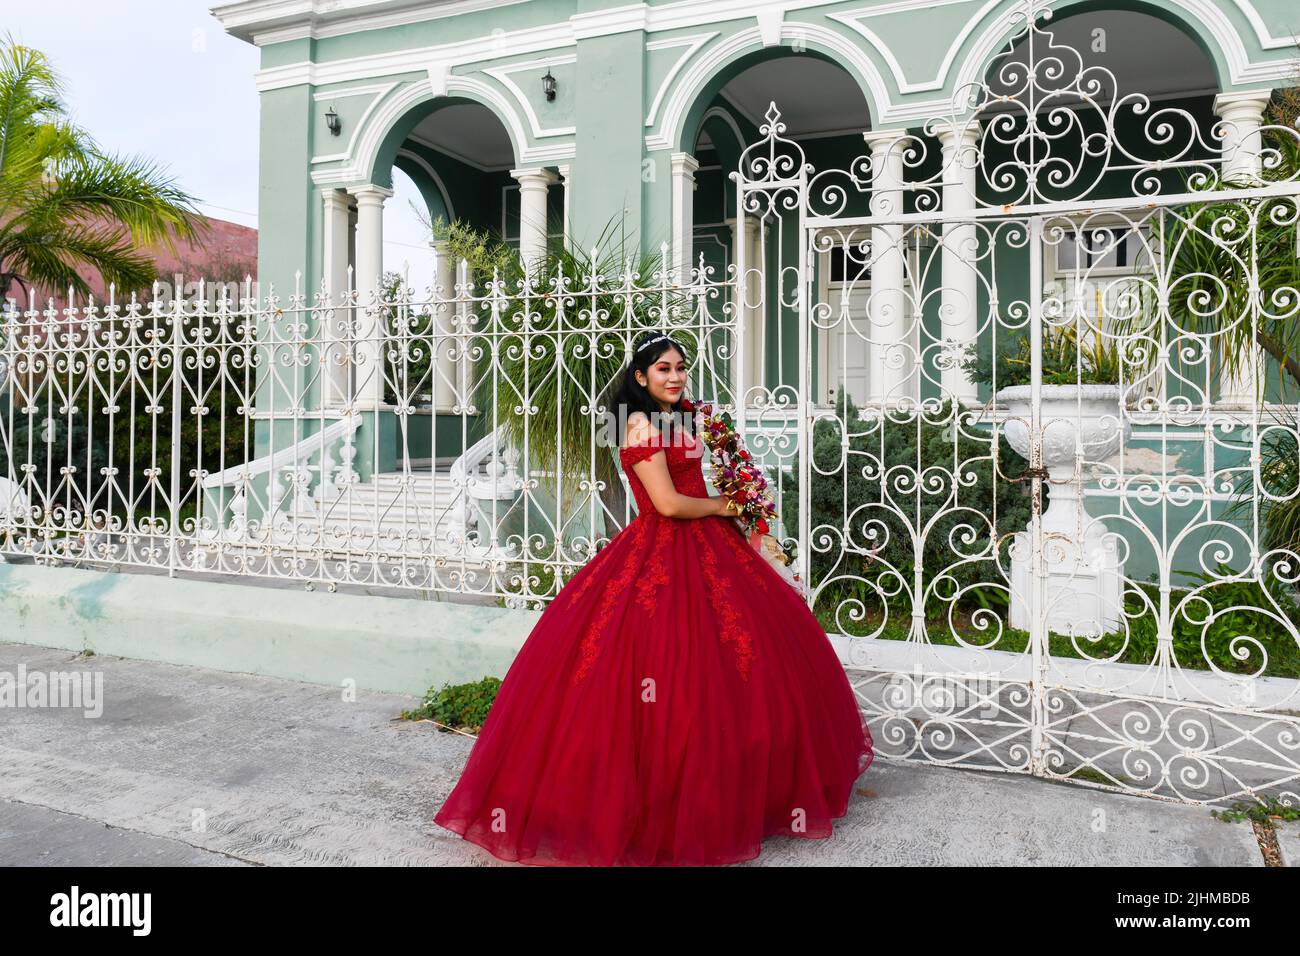 Girl celebrating her quinceañera (celebration of a girl's 15th birthday) in Merida, Yucatan Mexico Stock Photo